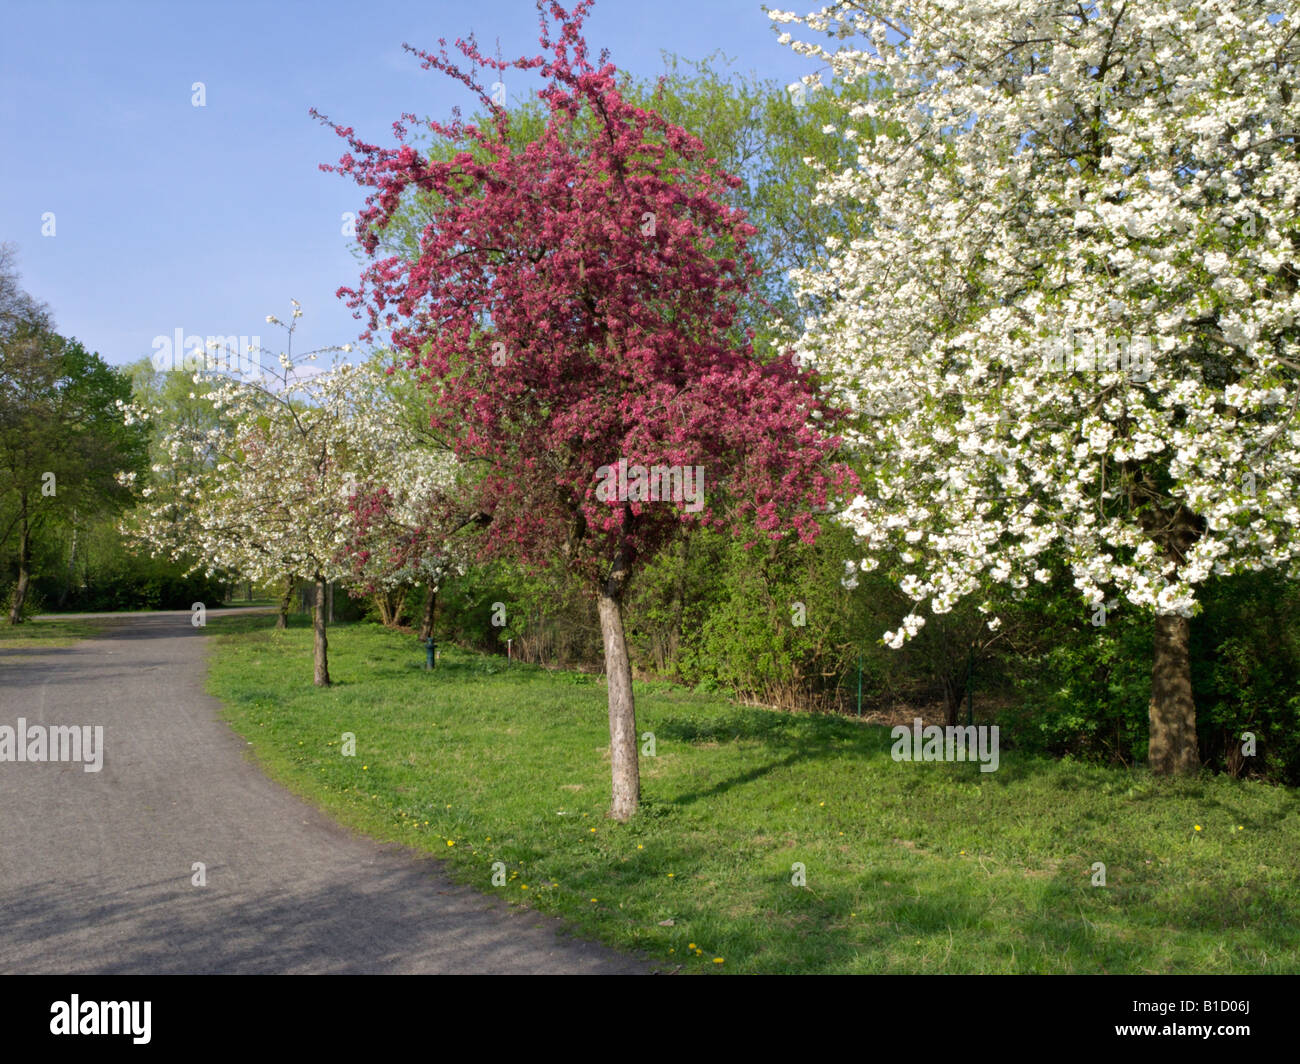 Flowering fruit trees Stock Photo